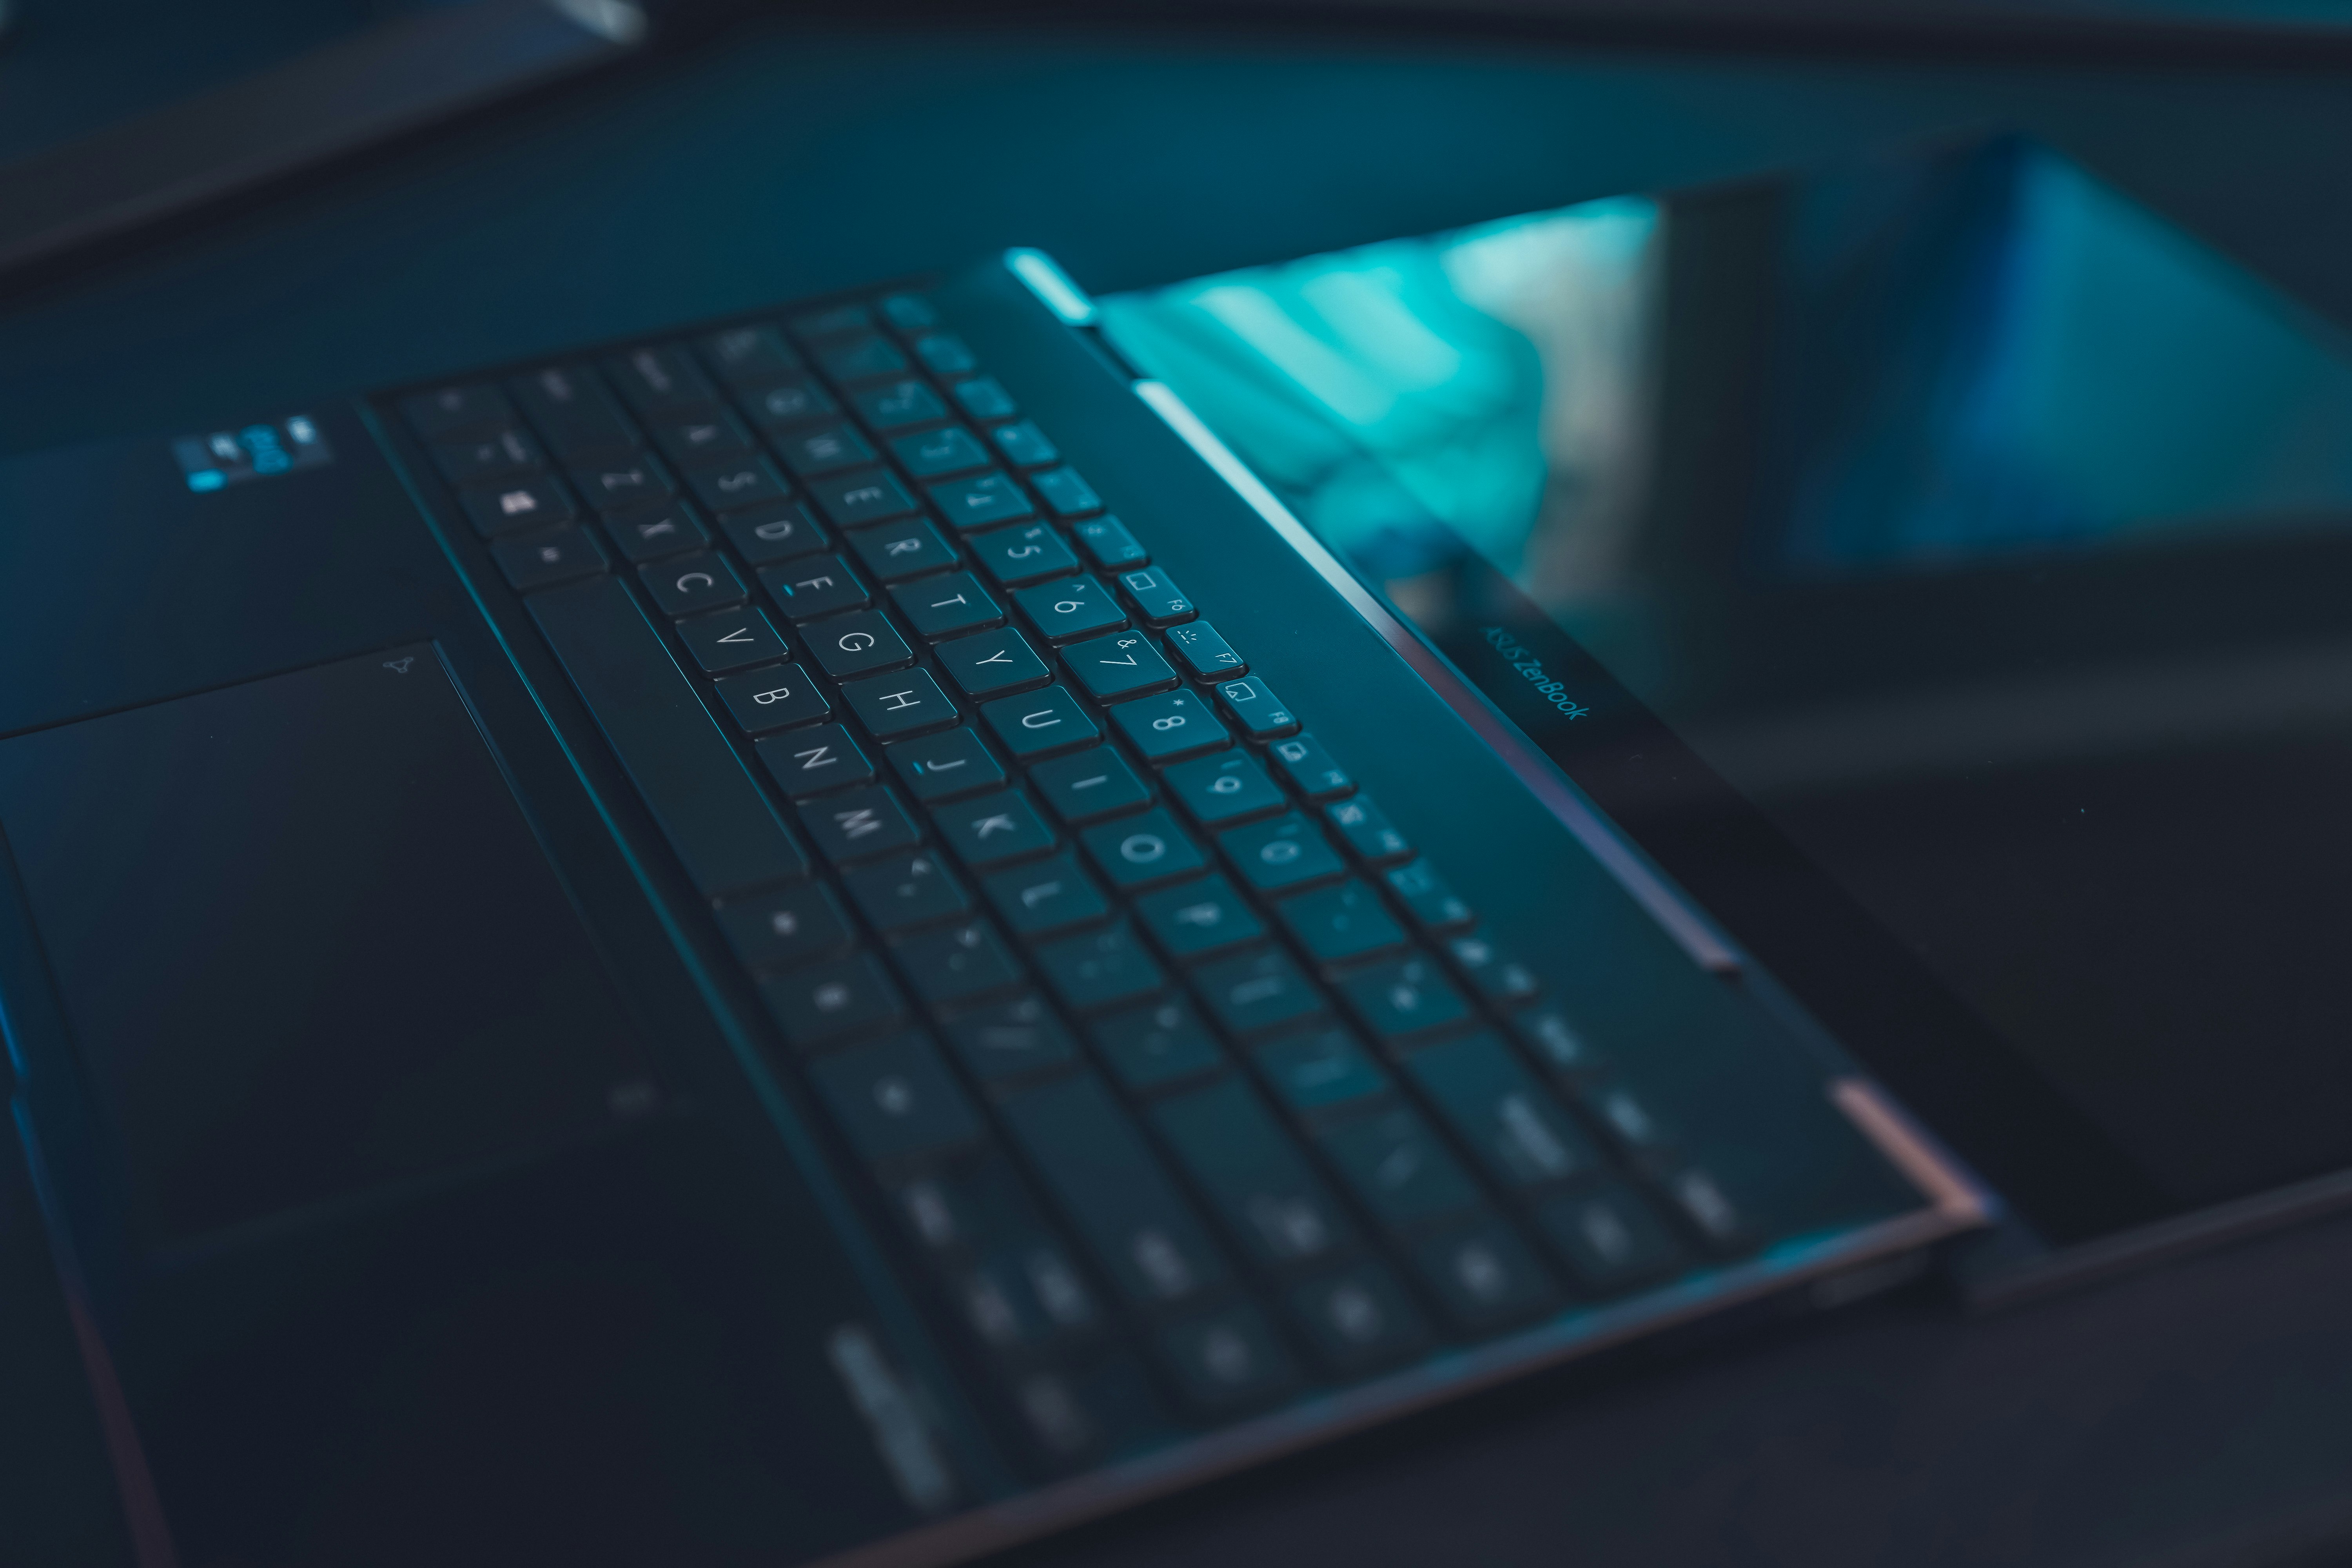  Asus laptop on black table at night